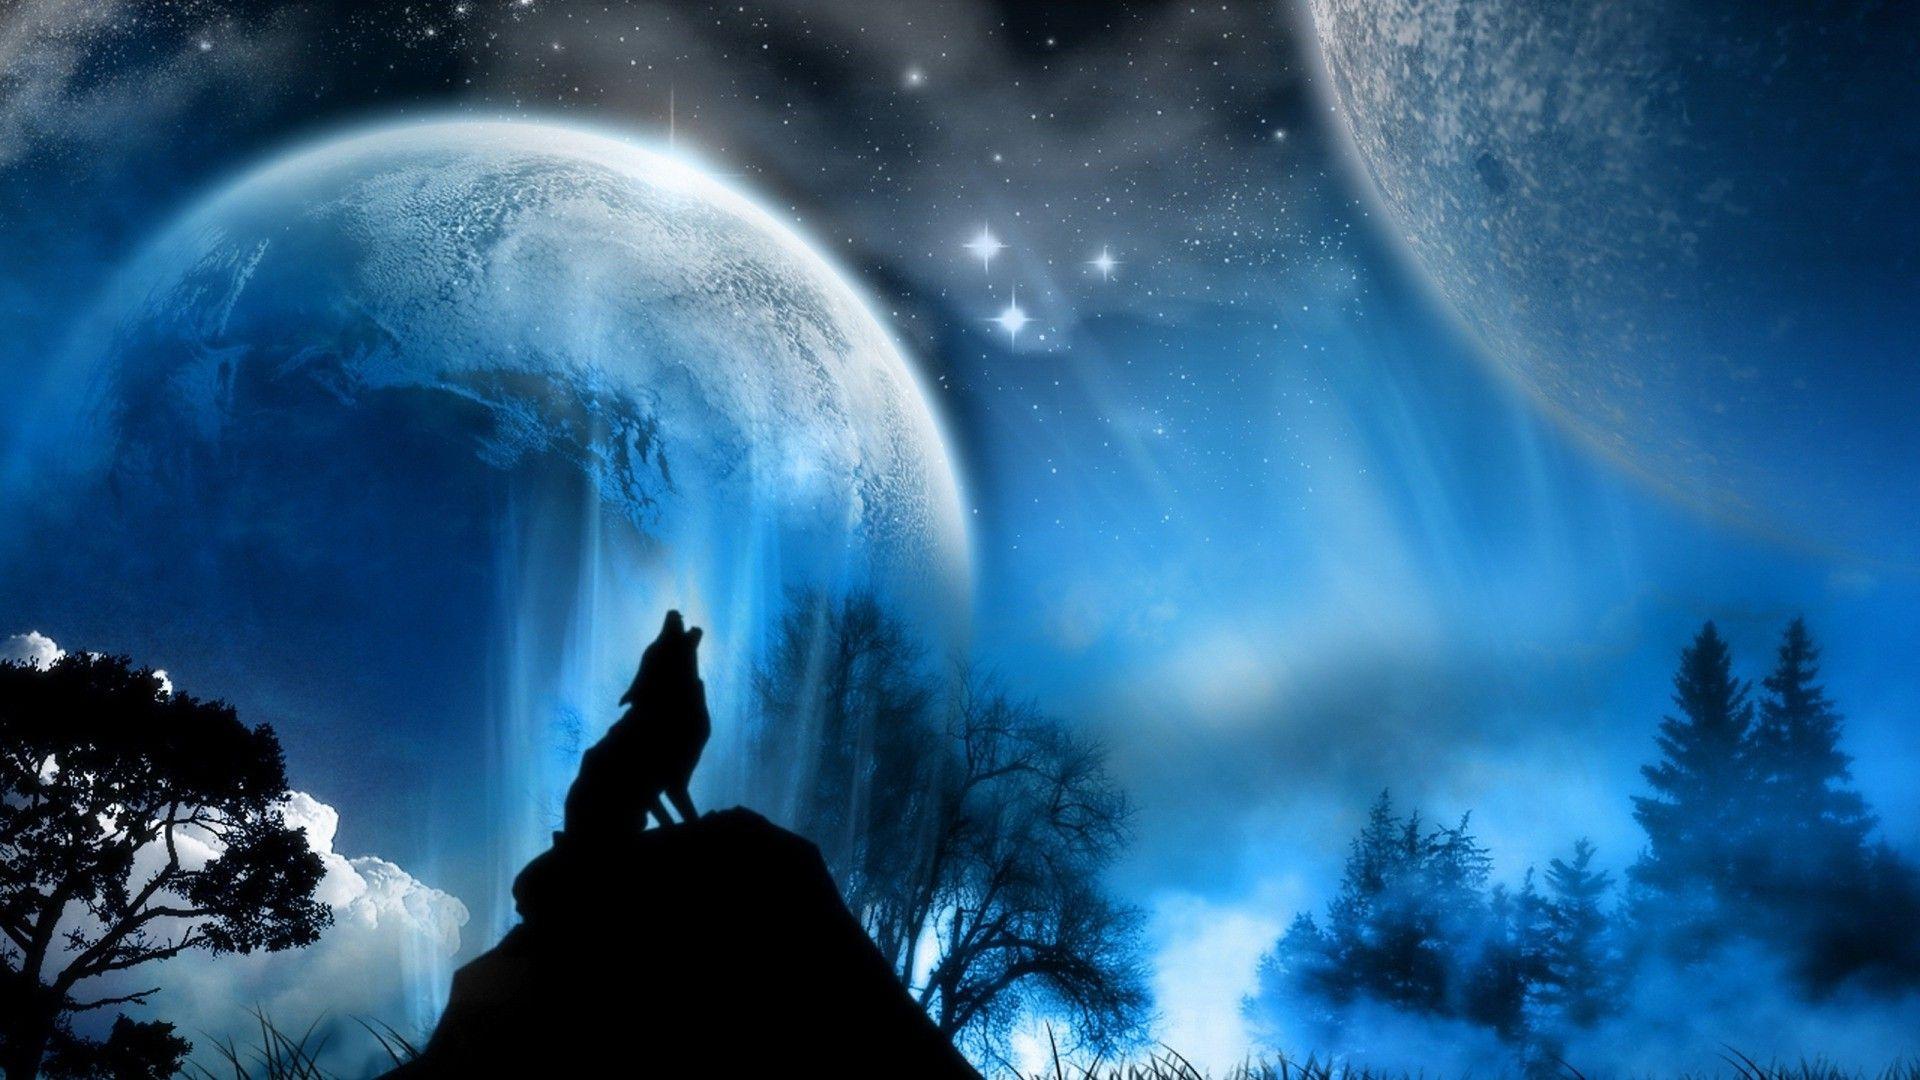 Wolf Howling at Full Moon Wallpaper. Wallpaper. Wolf wallpaper